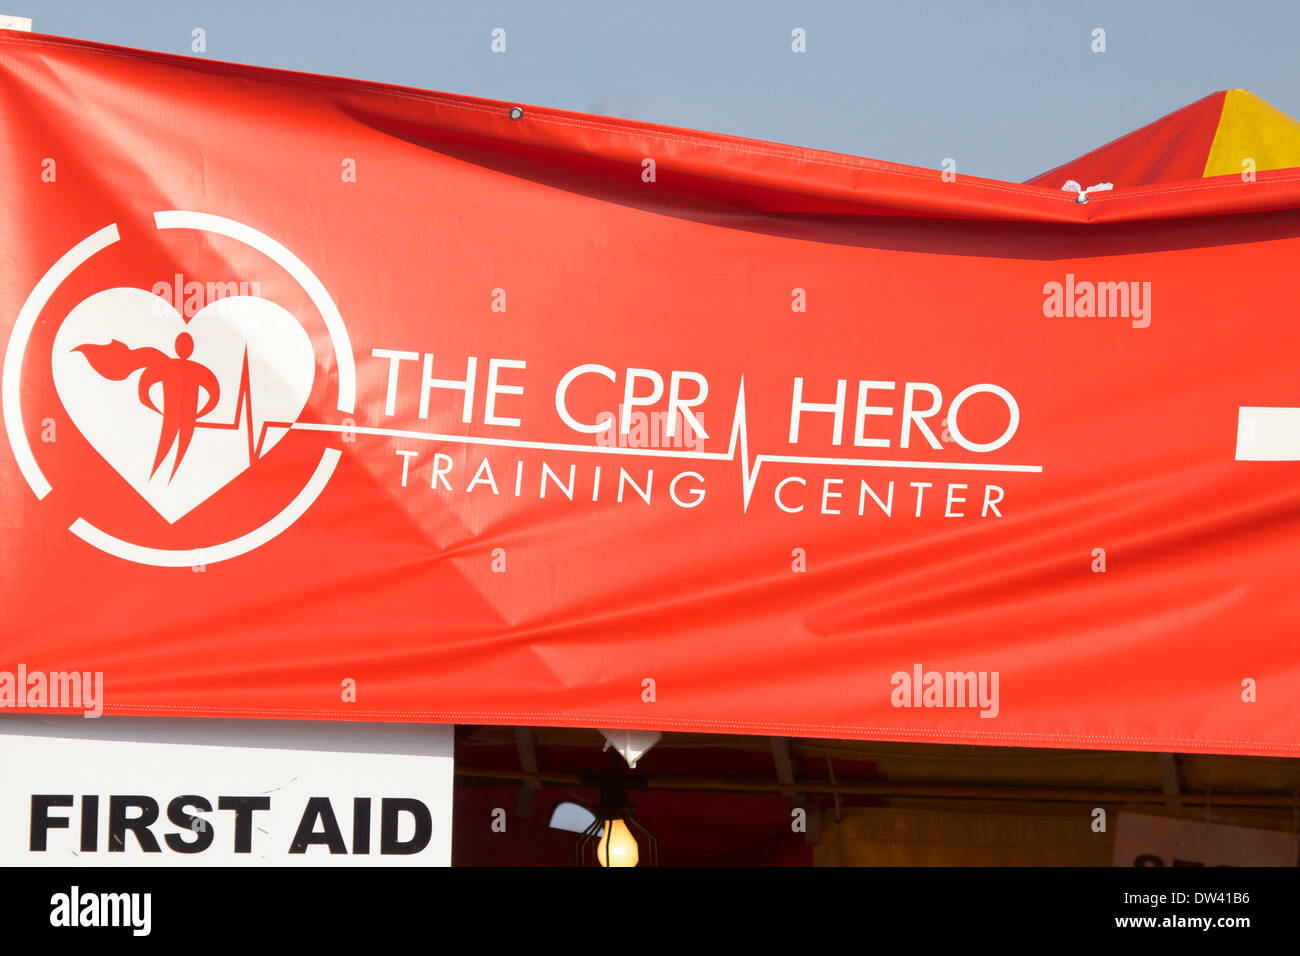 CPR hero training center banner Stock Photo